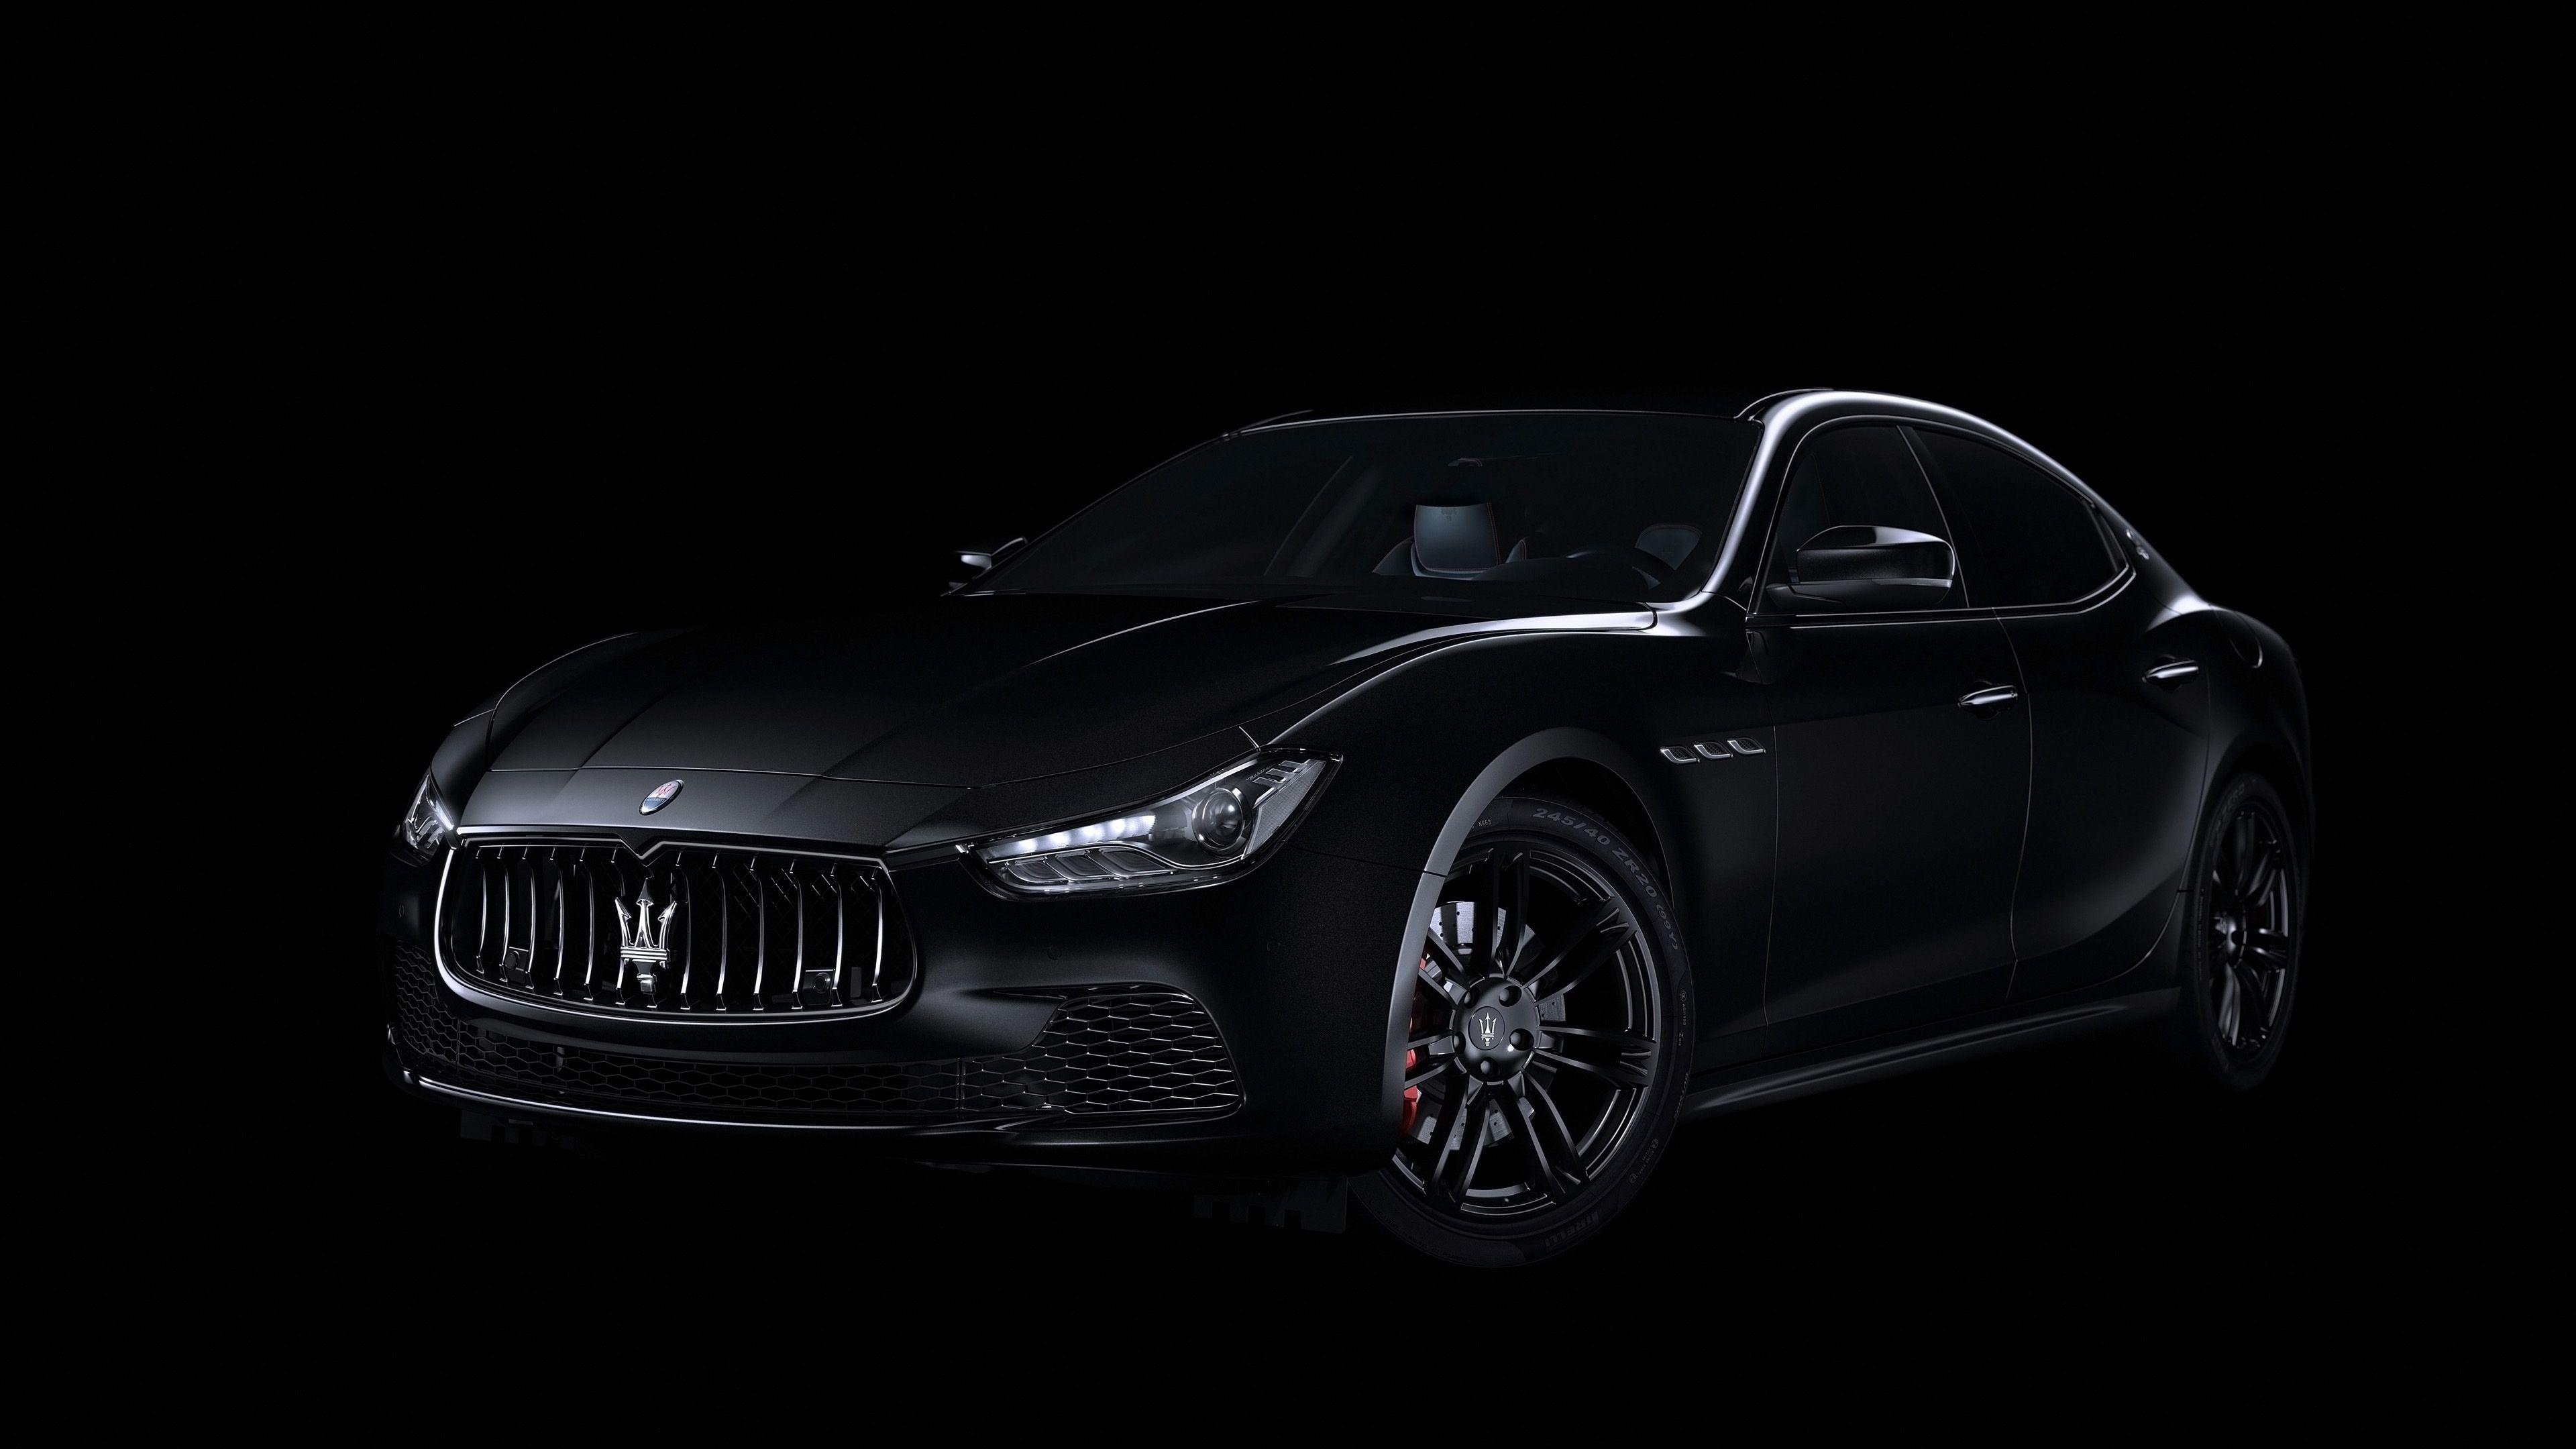 Maserati Ghibli, Black wallpapers, Top backgrounds, Sleek design, 3840x2160 4K Desktop